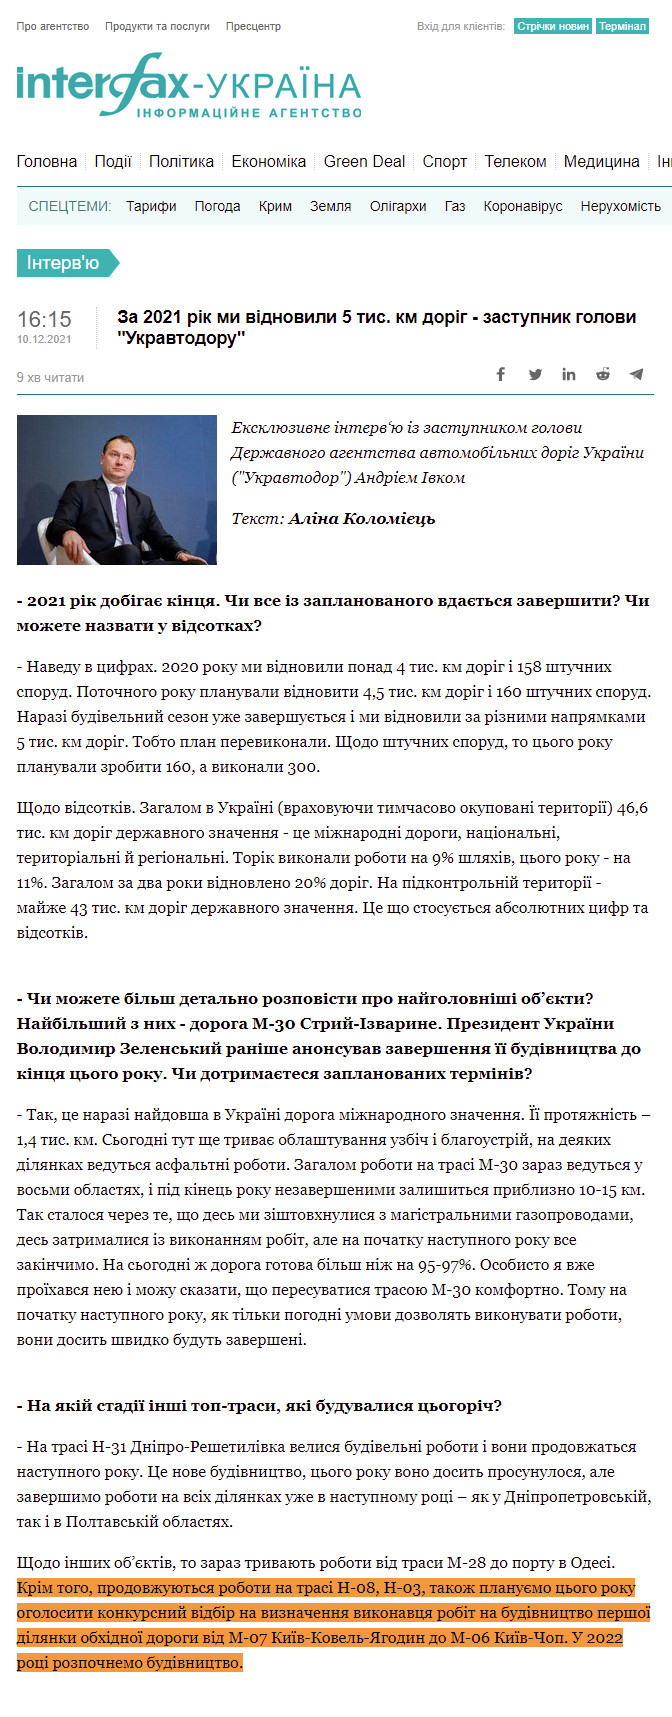 https://ua.interfax.com.ua/news/interview/785242.html